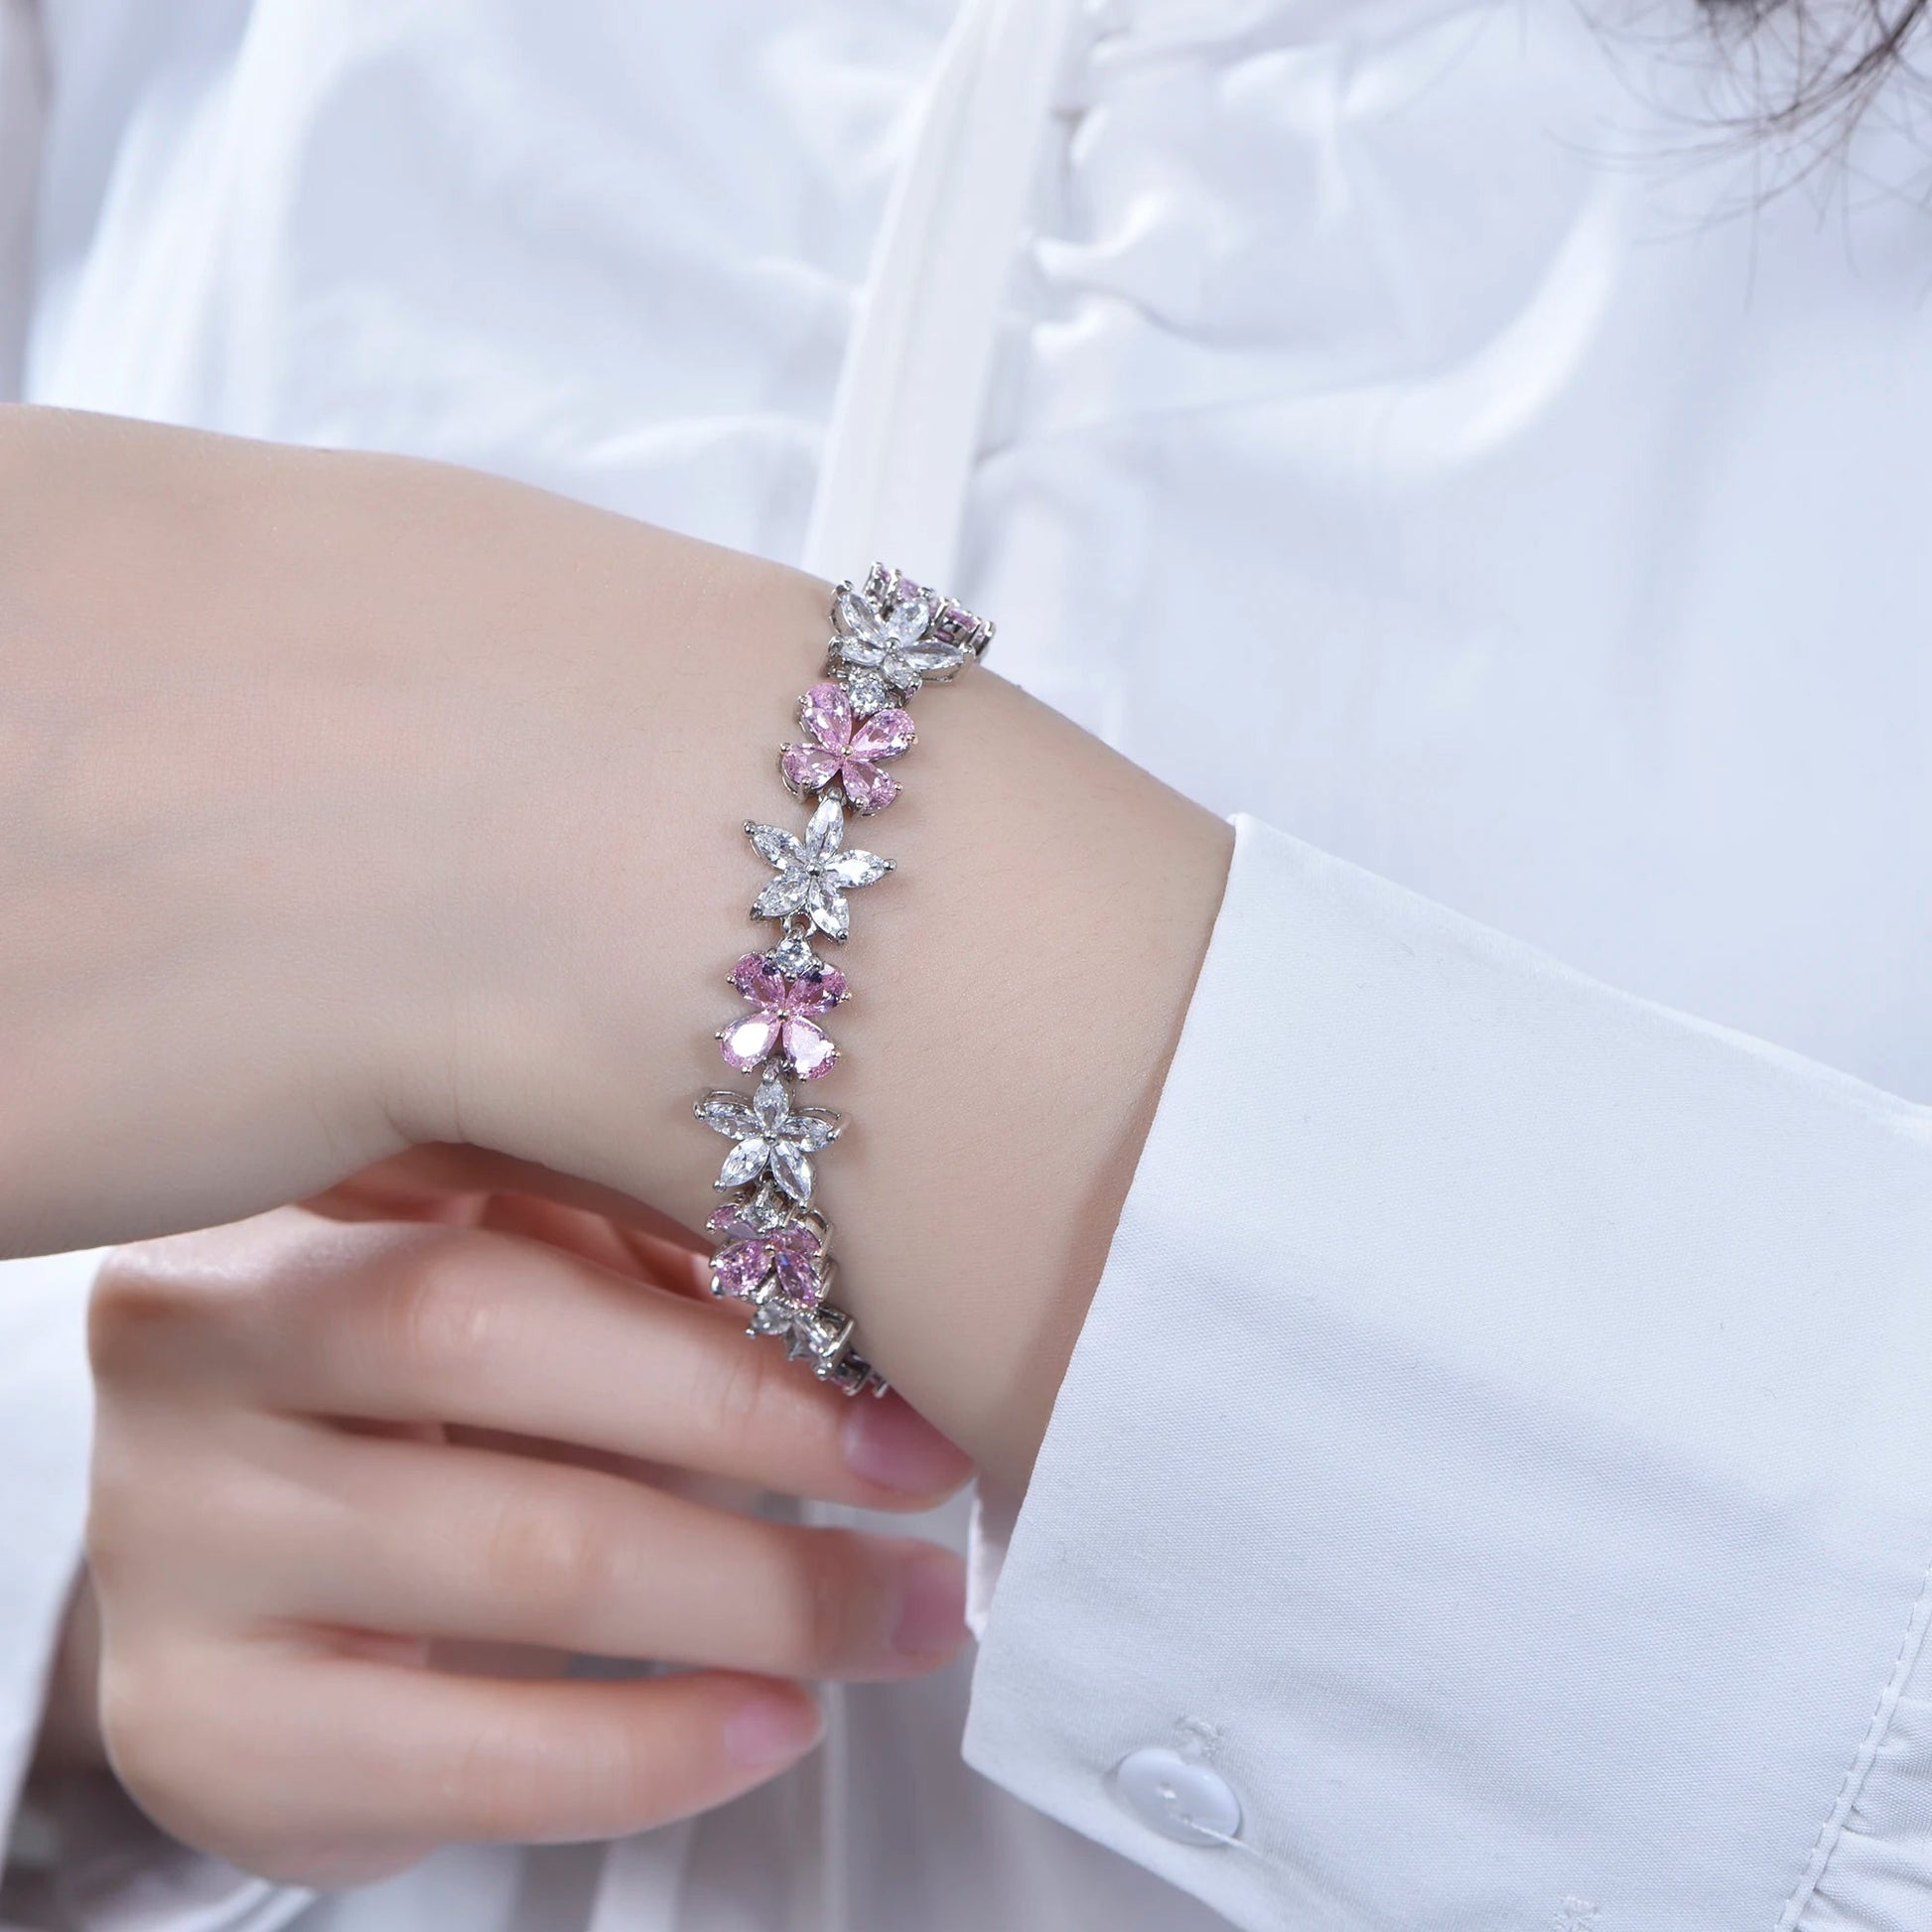 Crystal Bracelet 925 Sterling Silver Star Layer Women Bead Bracelet Fashion Jewelry for Gifts Accessories Kirin Jewelry